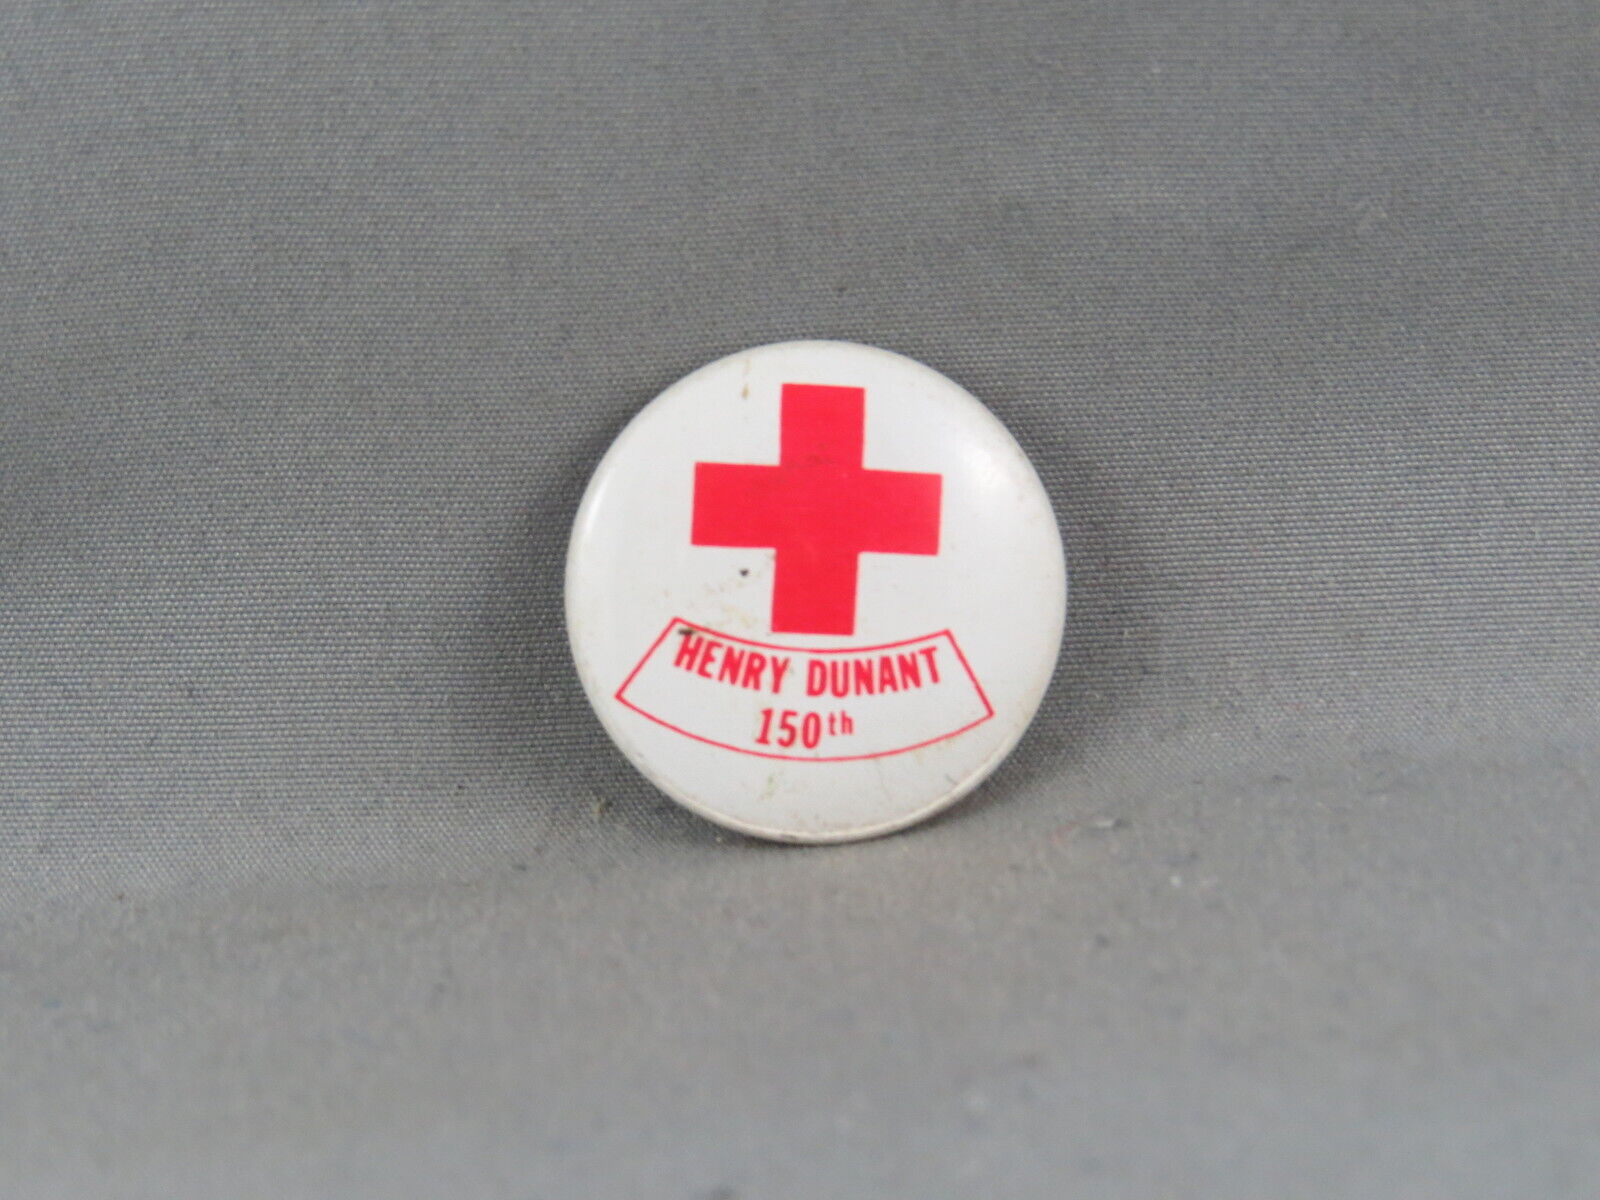 Red Cross Pin - Heny Dunant 150th  - Metal Pin 